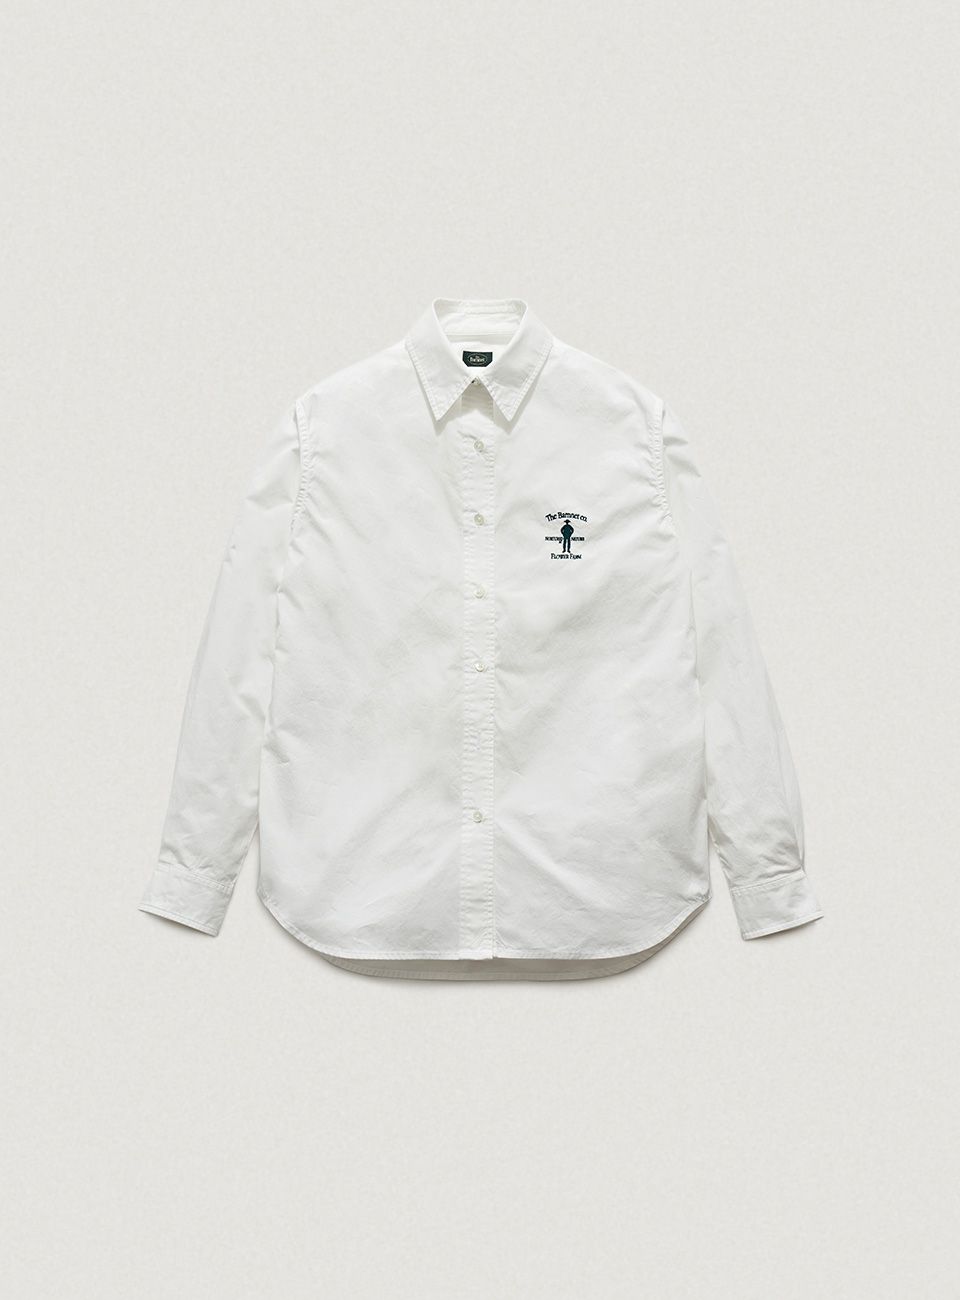 White Flower Farm Uniform Shirt[4월 초 순차 배송]